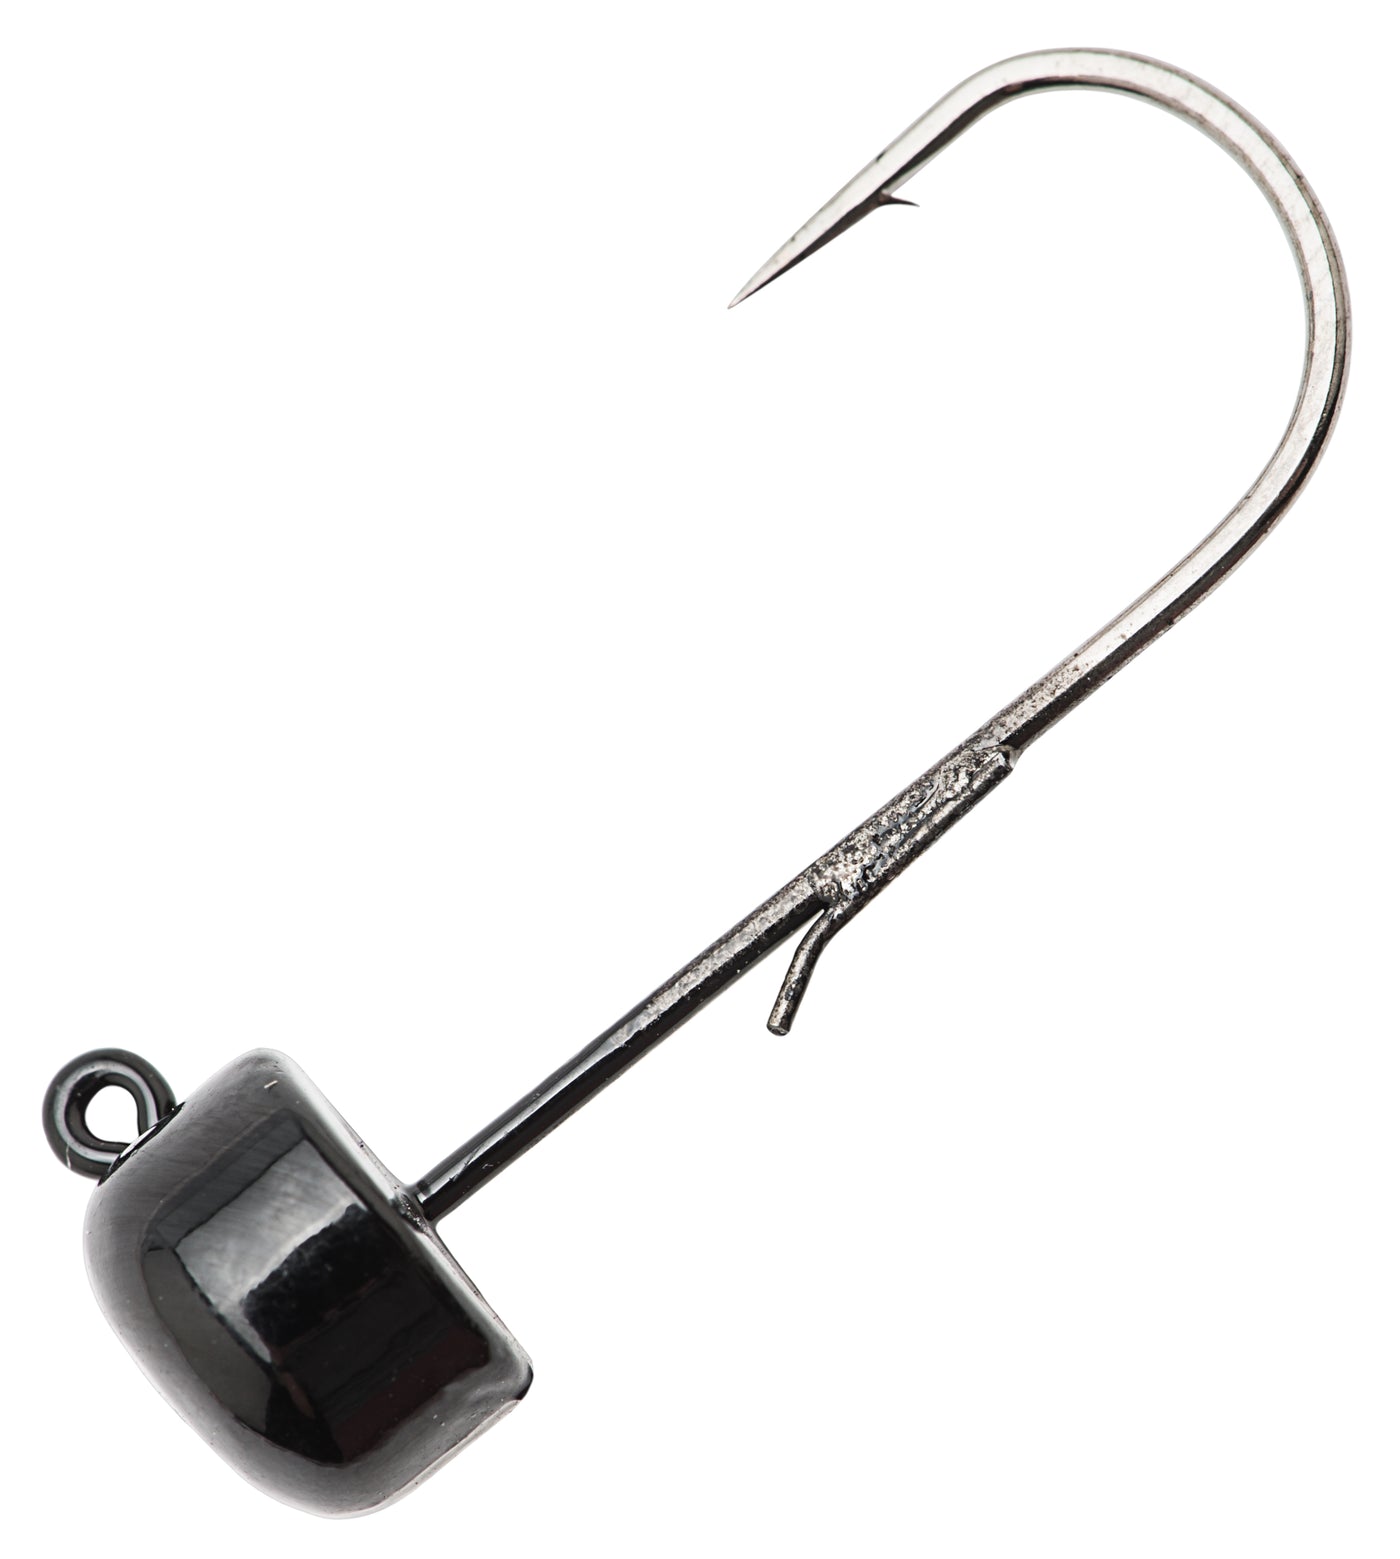 Tungsten EWG Ned head -3/0 Hook - The Perfect Jig